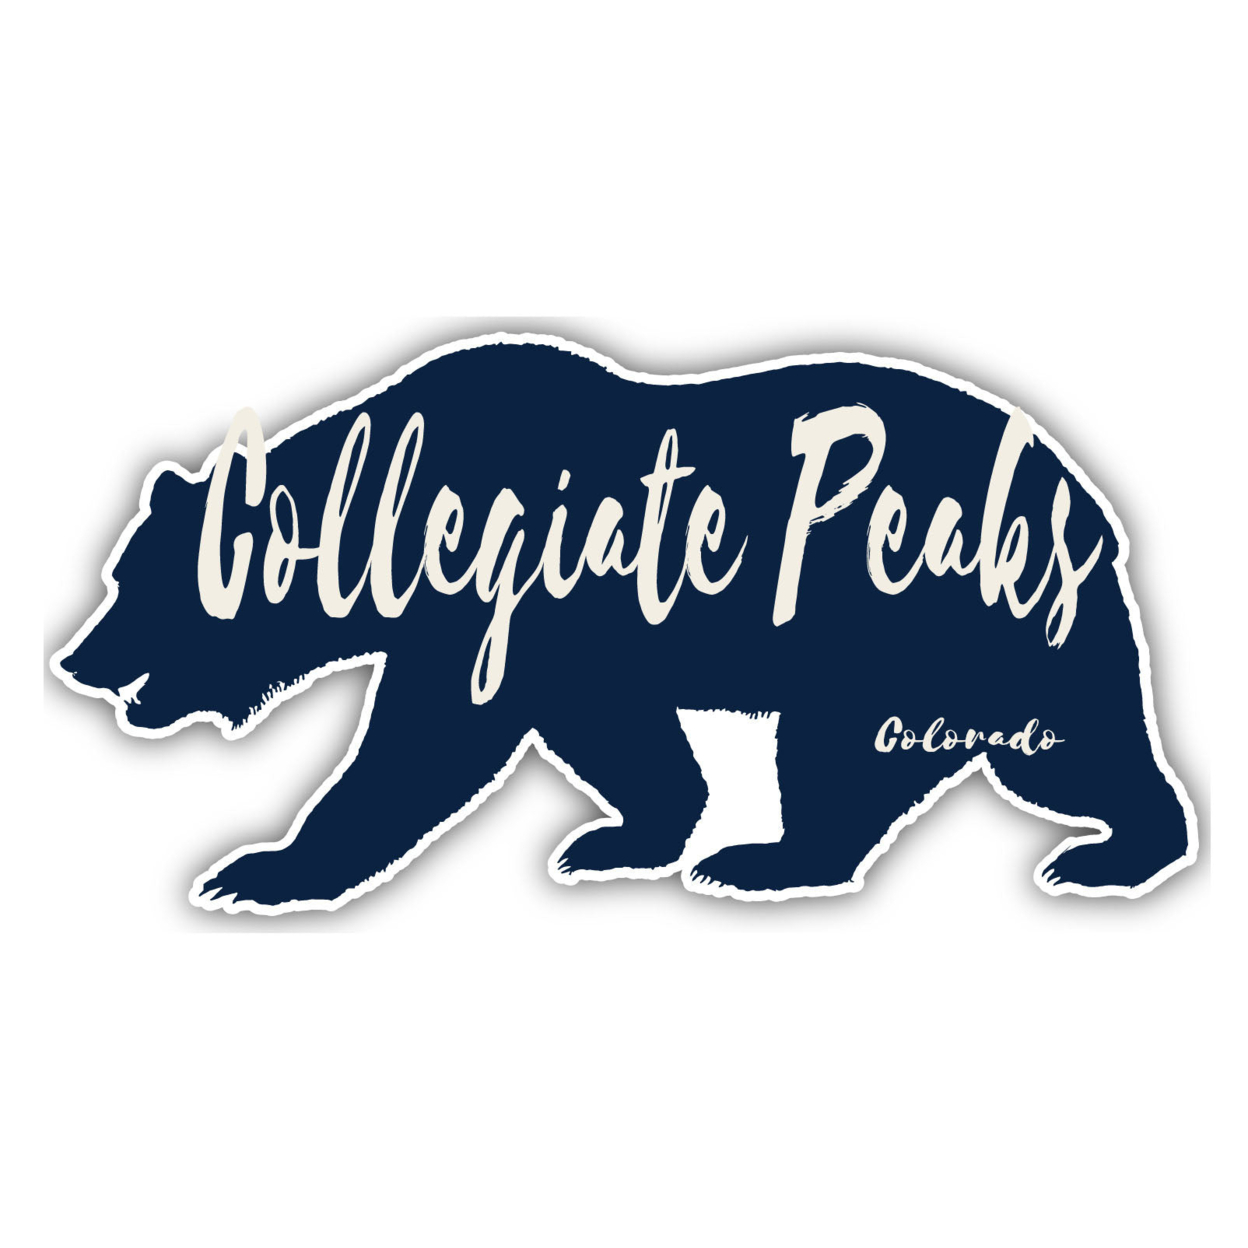 Collegiate Peaks Colorado Souvenir Decorative Stickers (Choose Theme And Size) - Single Unit, 2-Inch, Bear